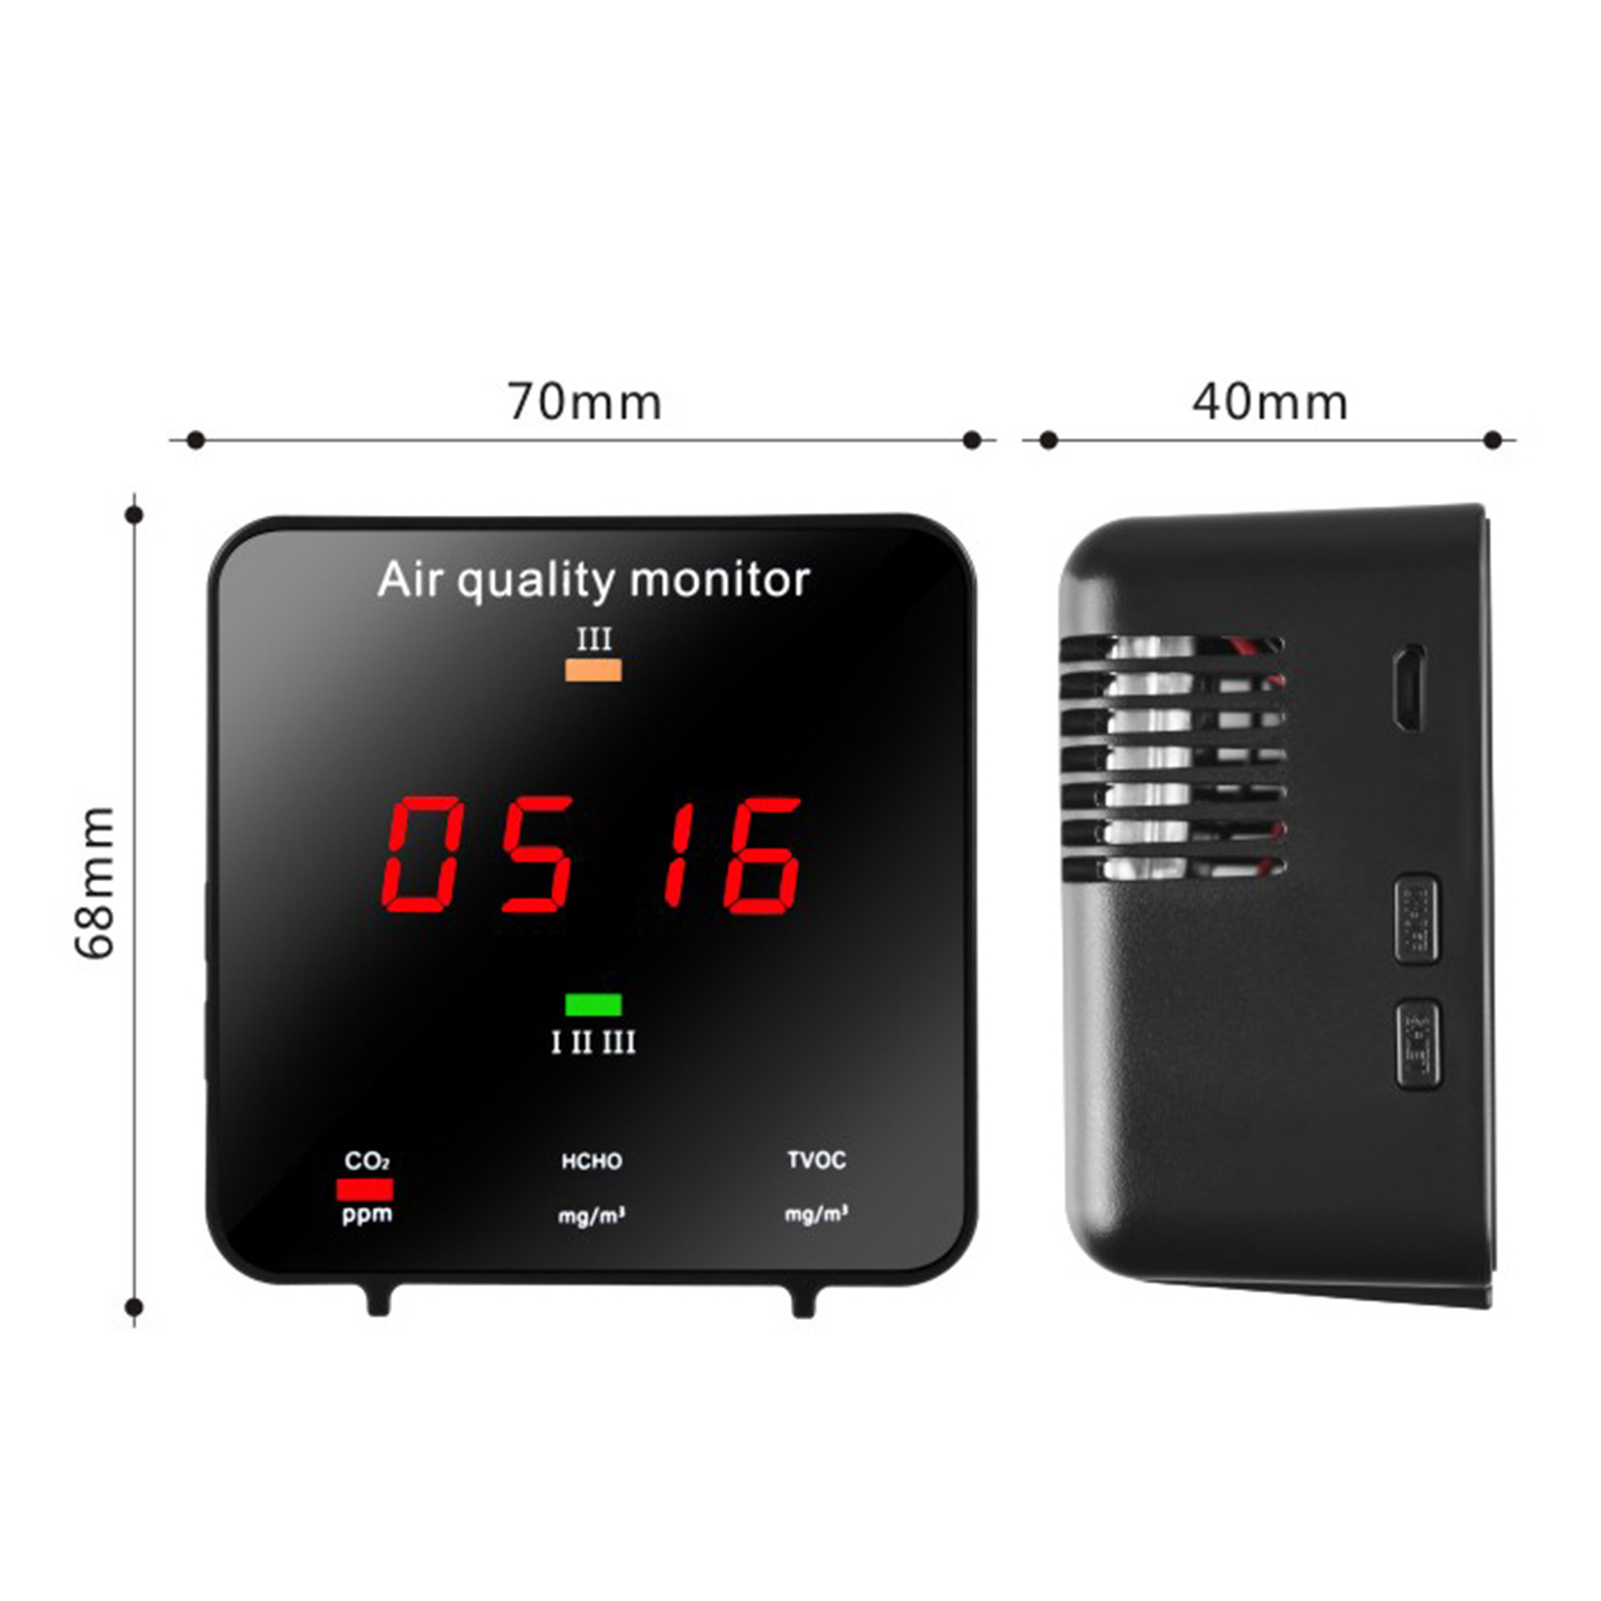 CO2-Meter-Digital-Temperature-Humidity-Sensor-Tester-Air-Quality-Monitor-Carbon-Dioxide-TVOC-Formald-1824199-21